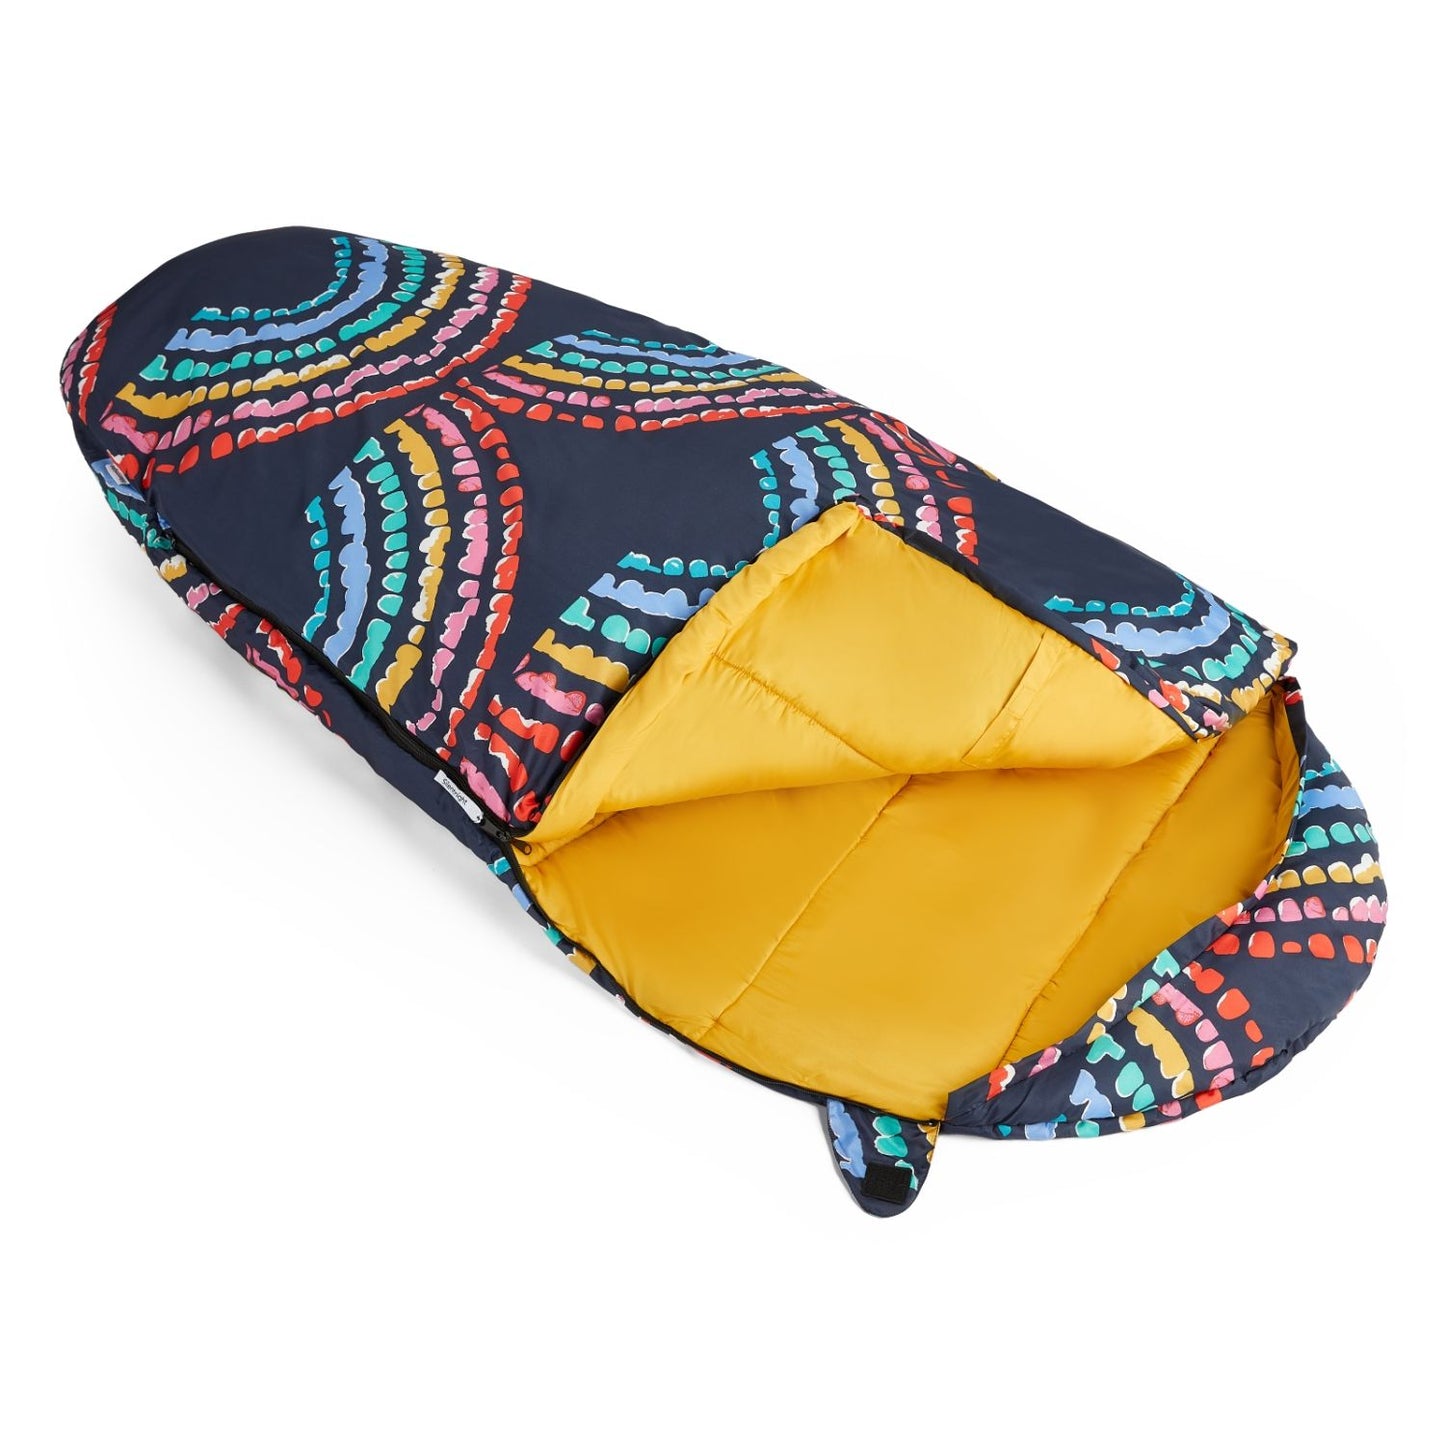 Silentnight Camping Collection Rainbow Print Kids Sleeping Bag